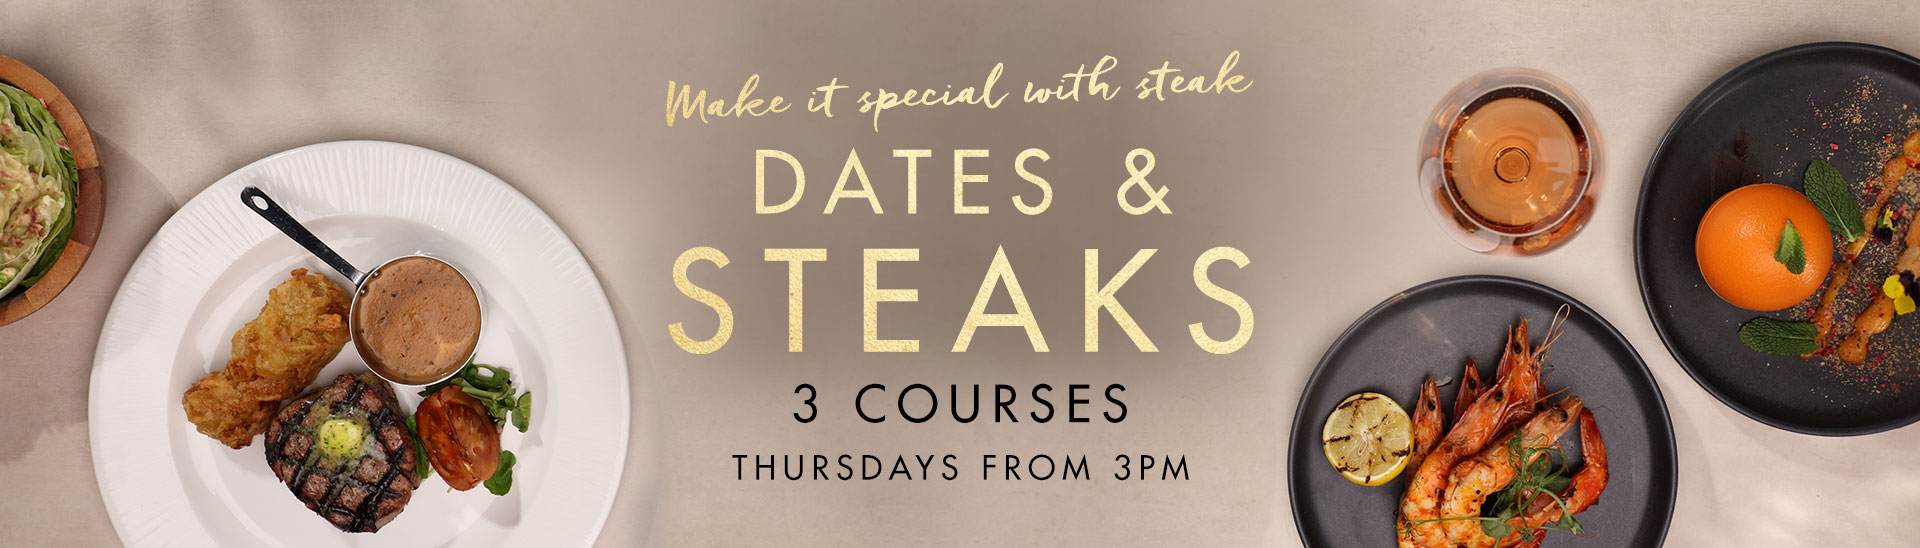 Dates & Steaks at Miller & Carter Epping Forest